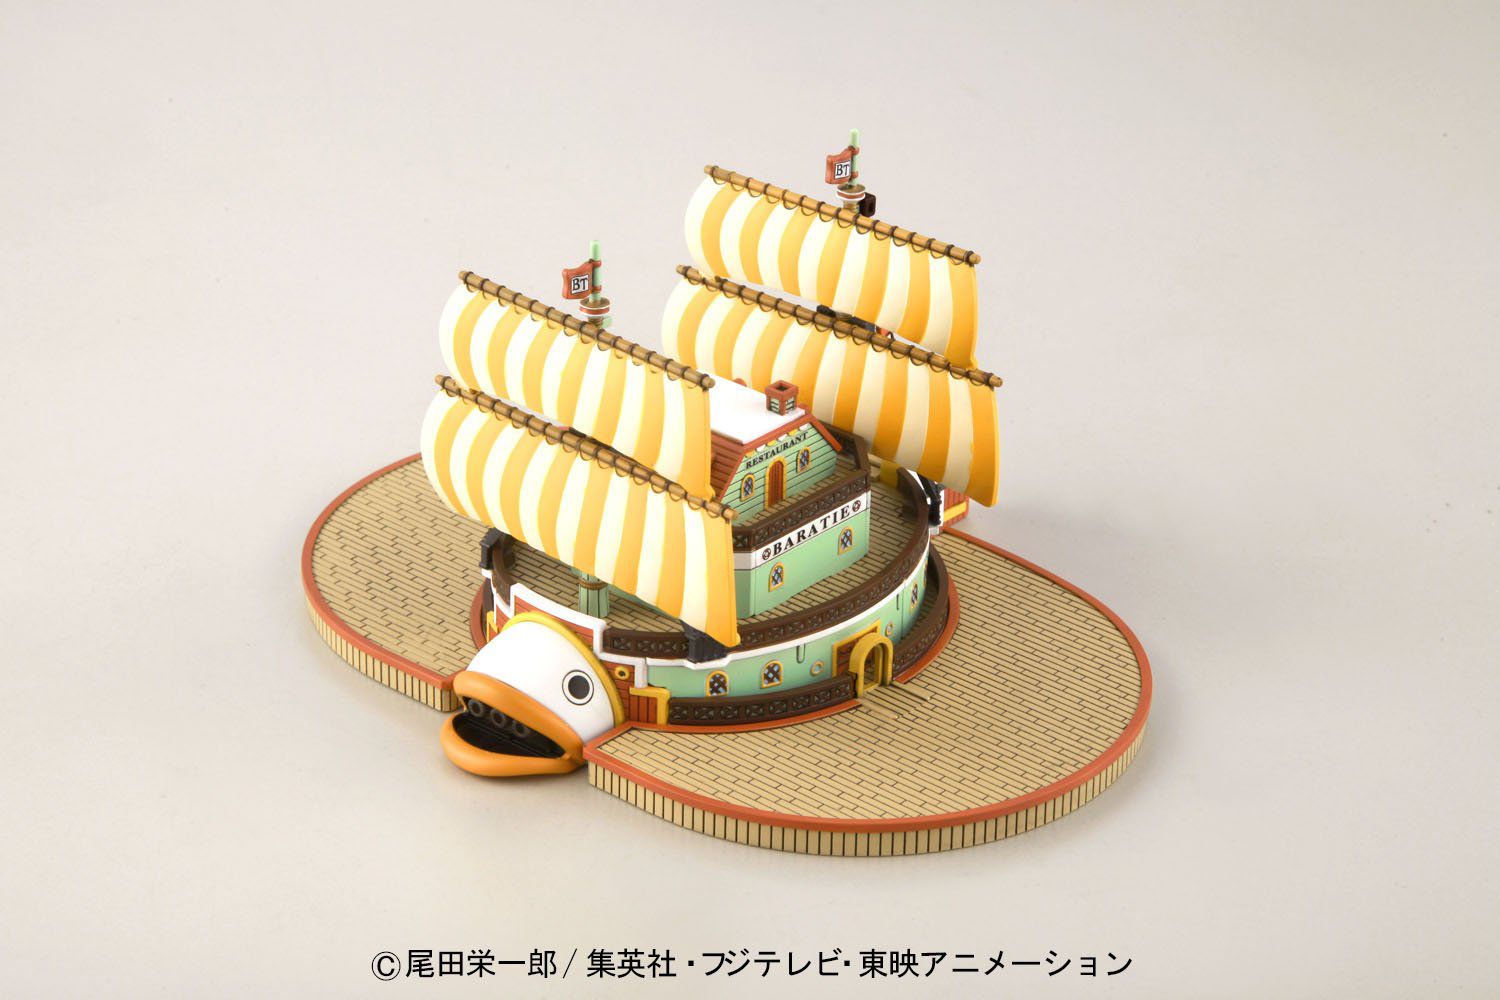 Baratie  - Grand Ship Collection 10 - Glacier Hobbies - Bandai